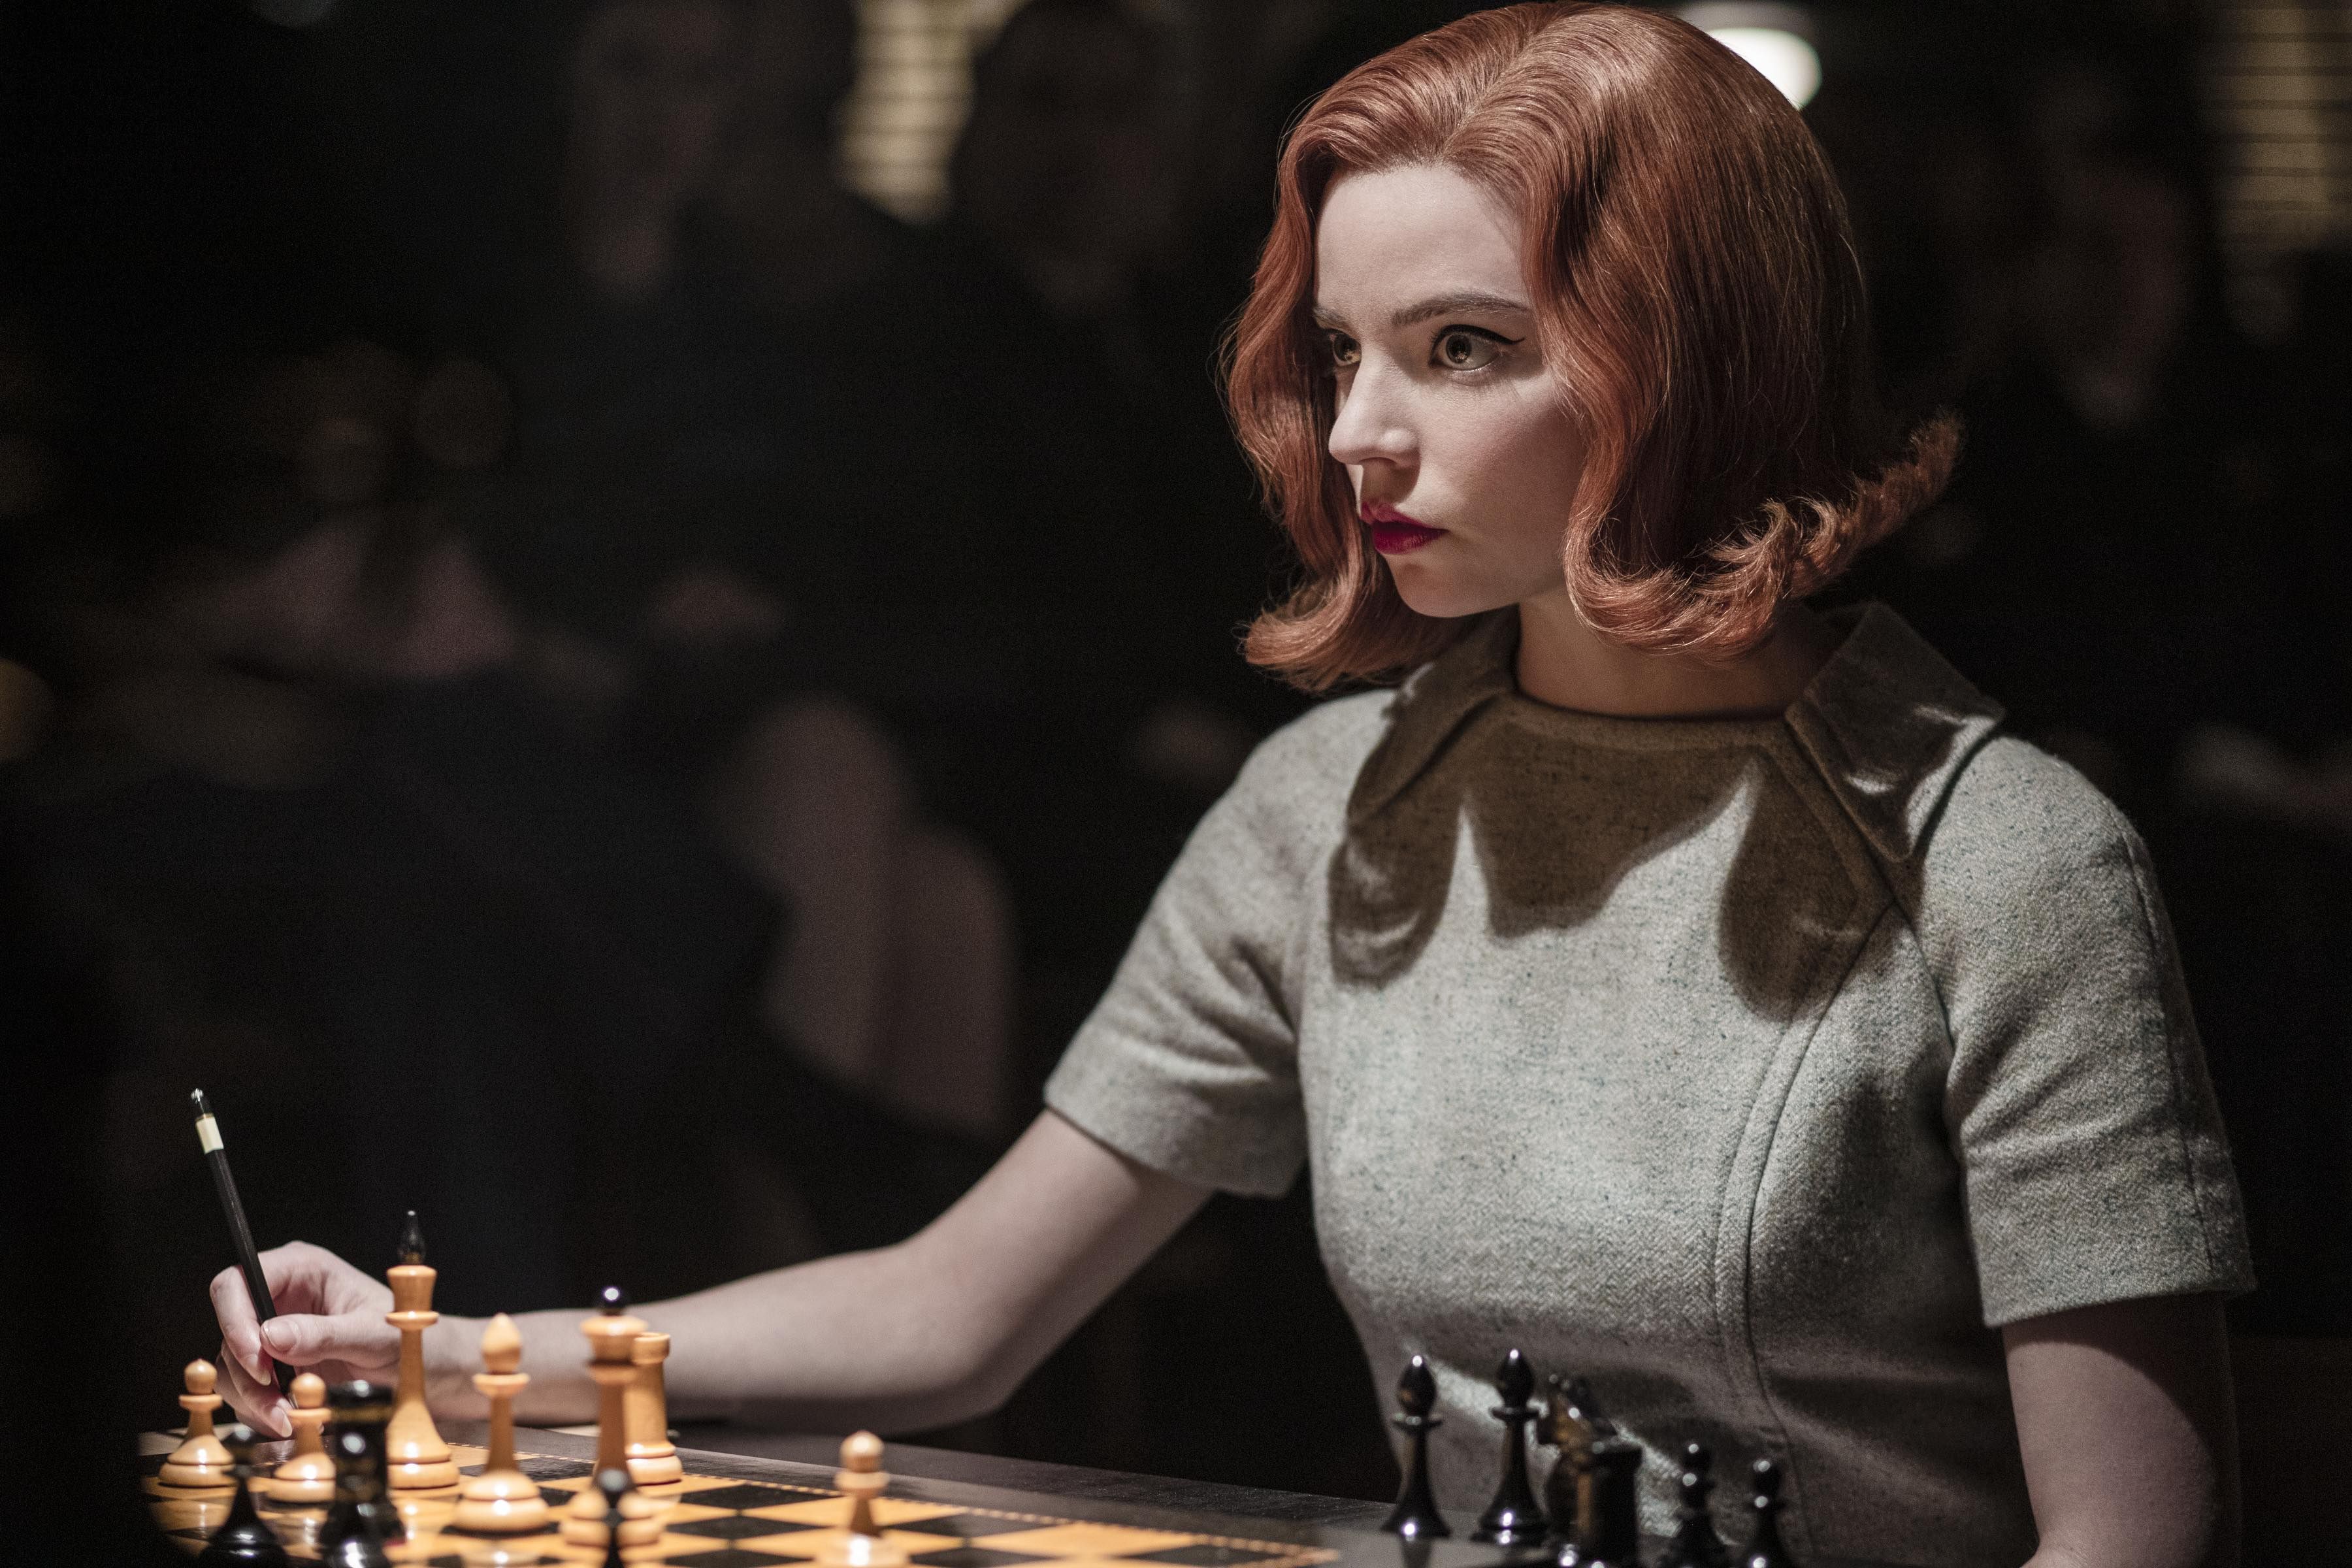 Netflix's The Queen's Gambit is under fire - here's why